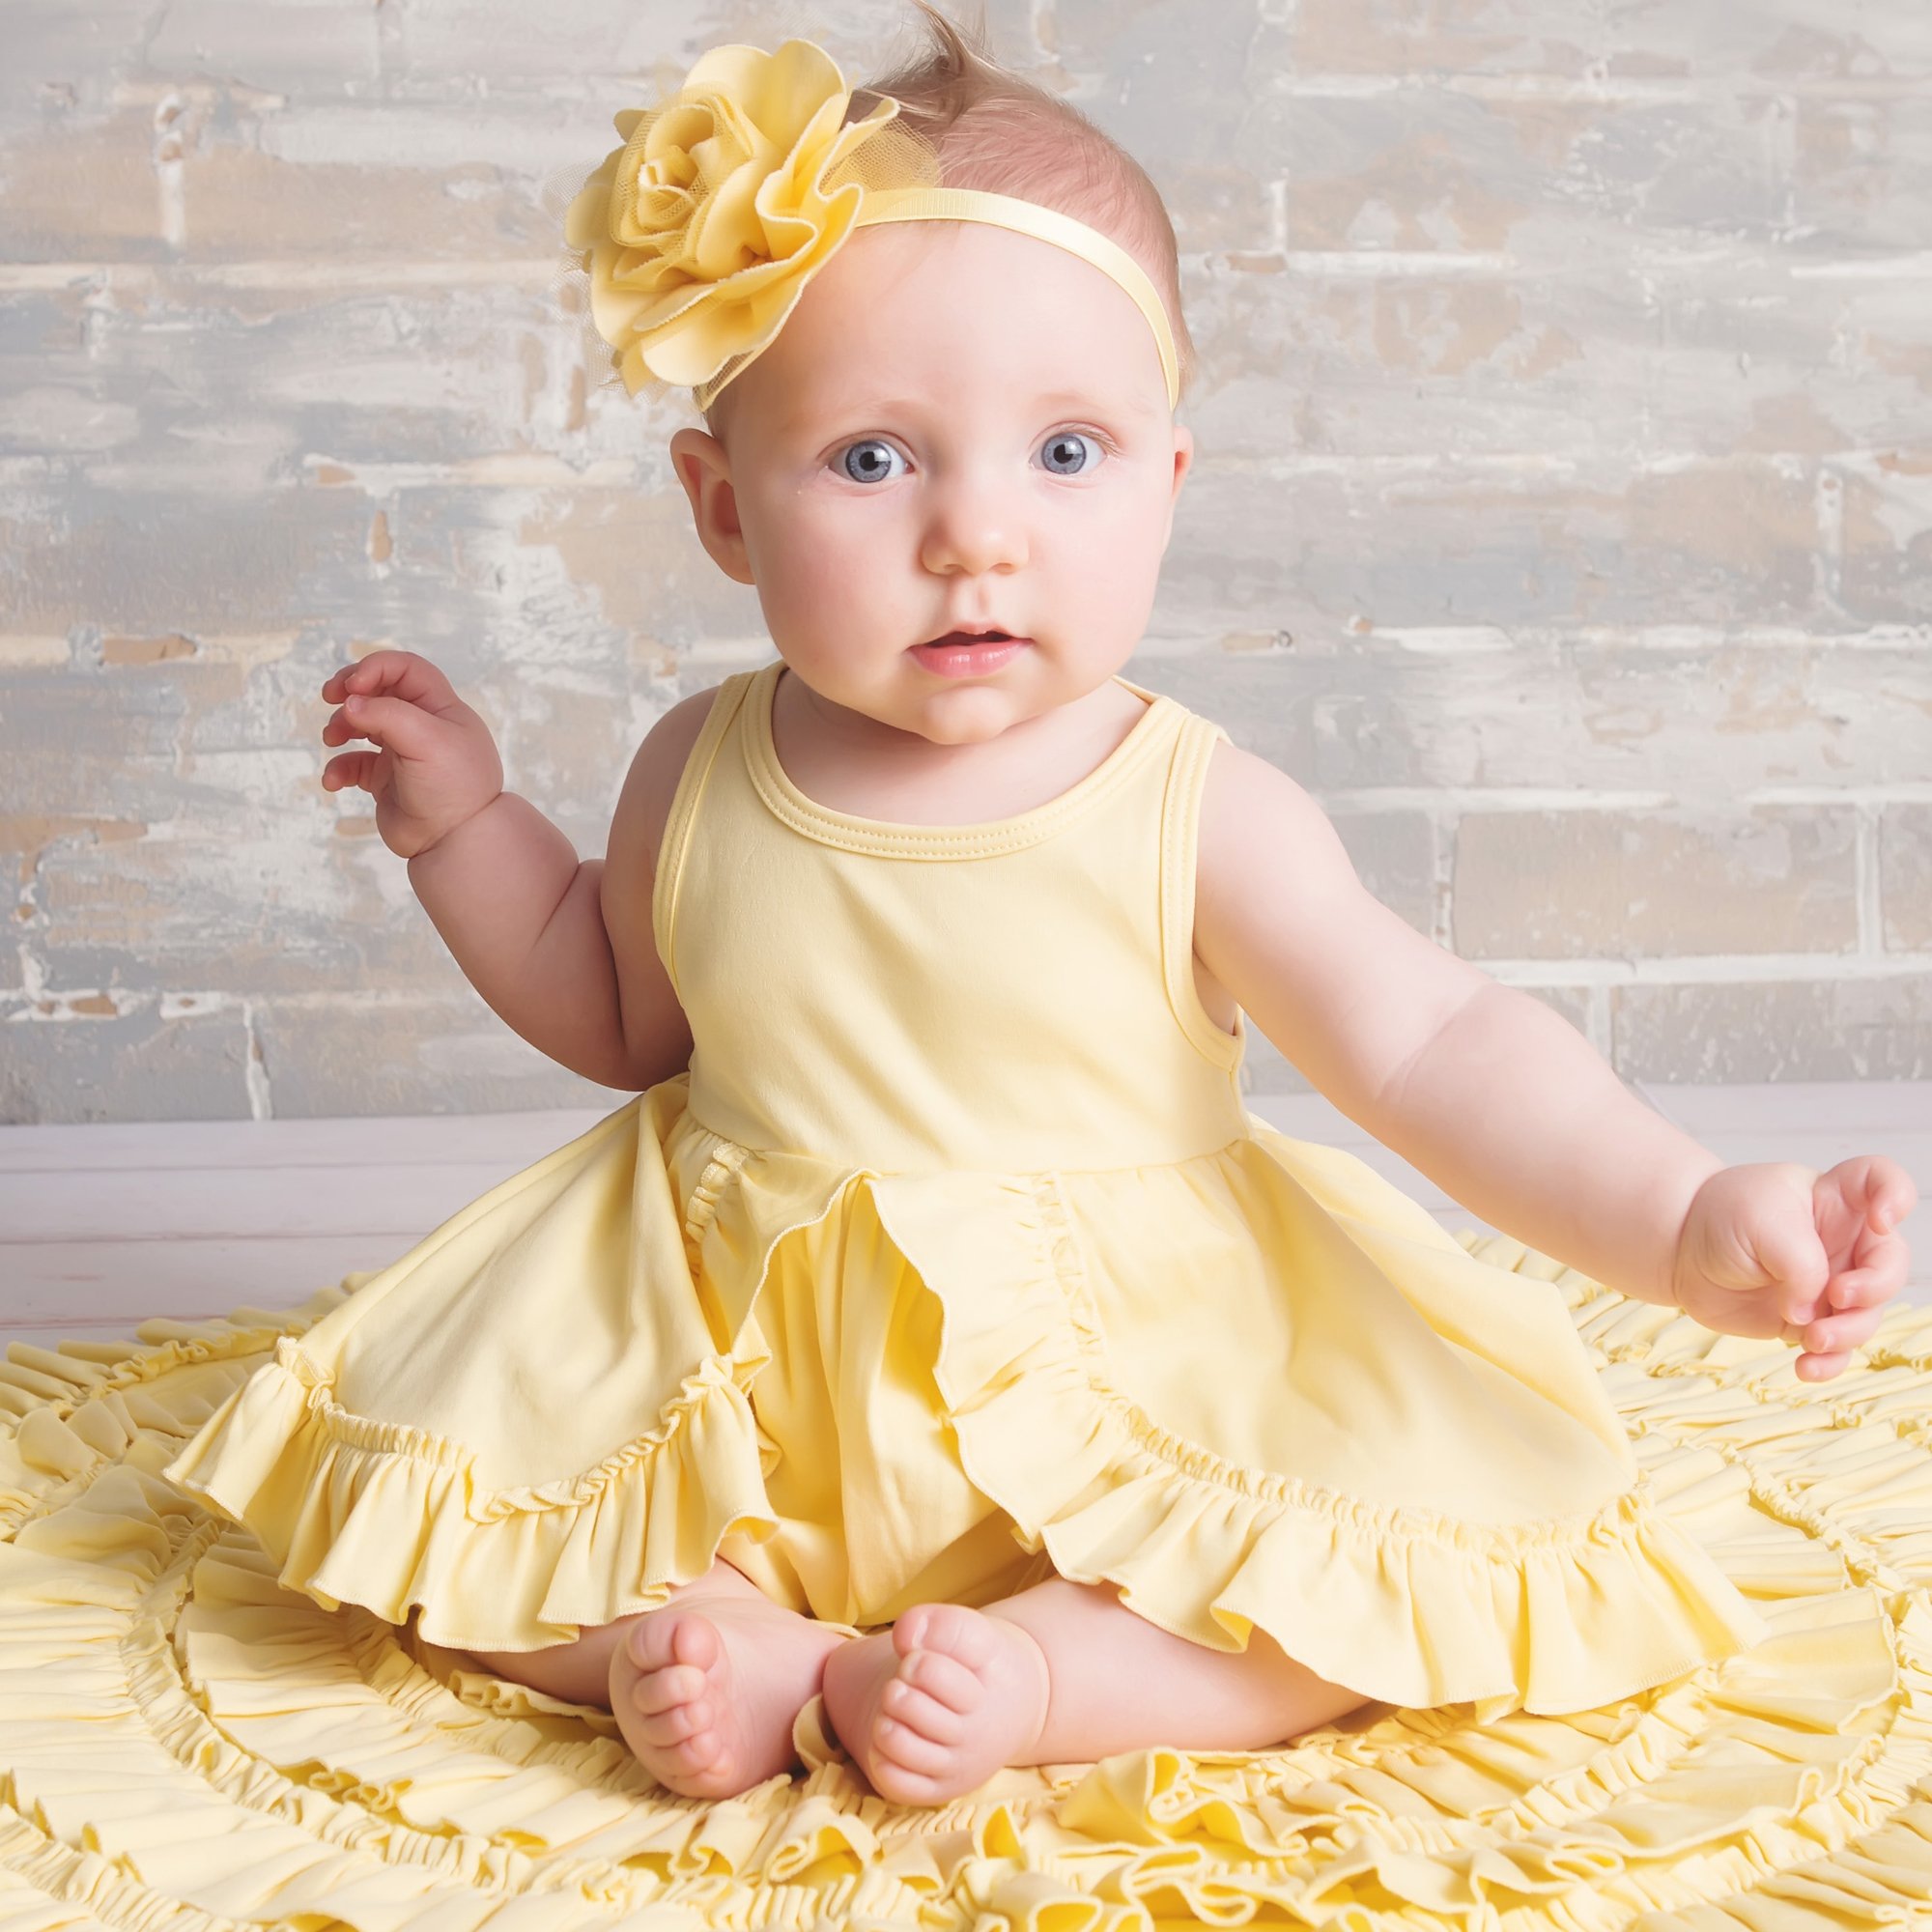 lemon outfit baby girl